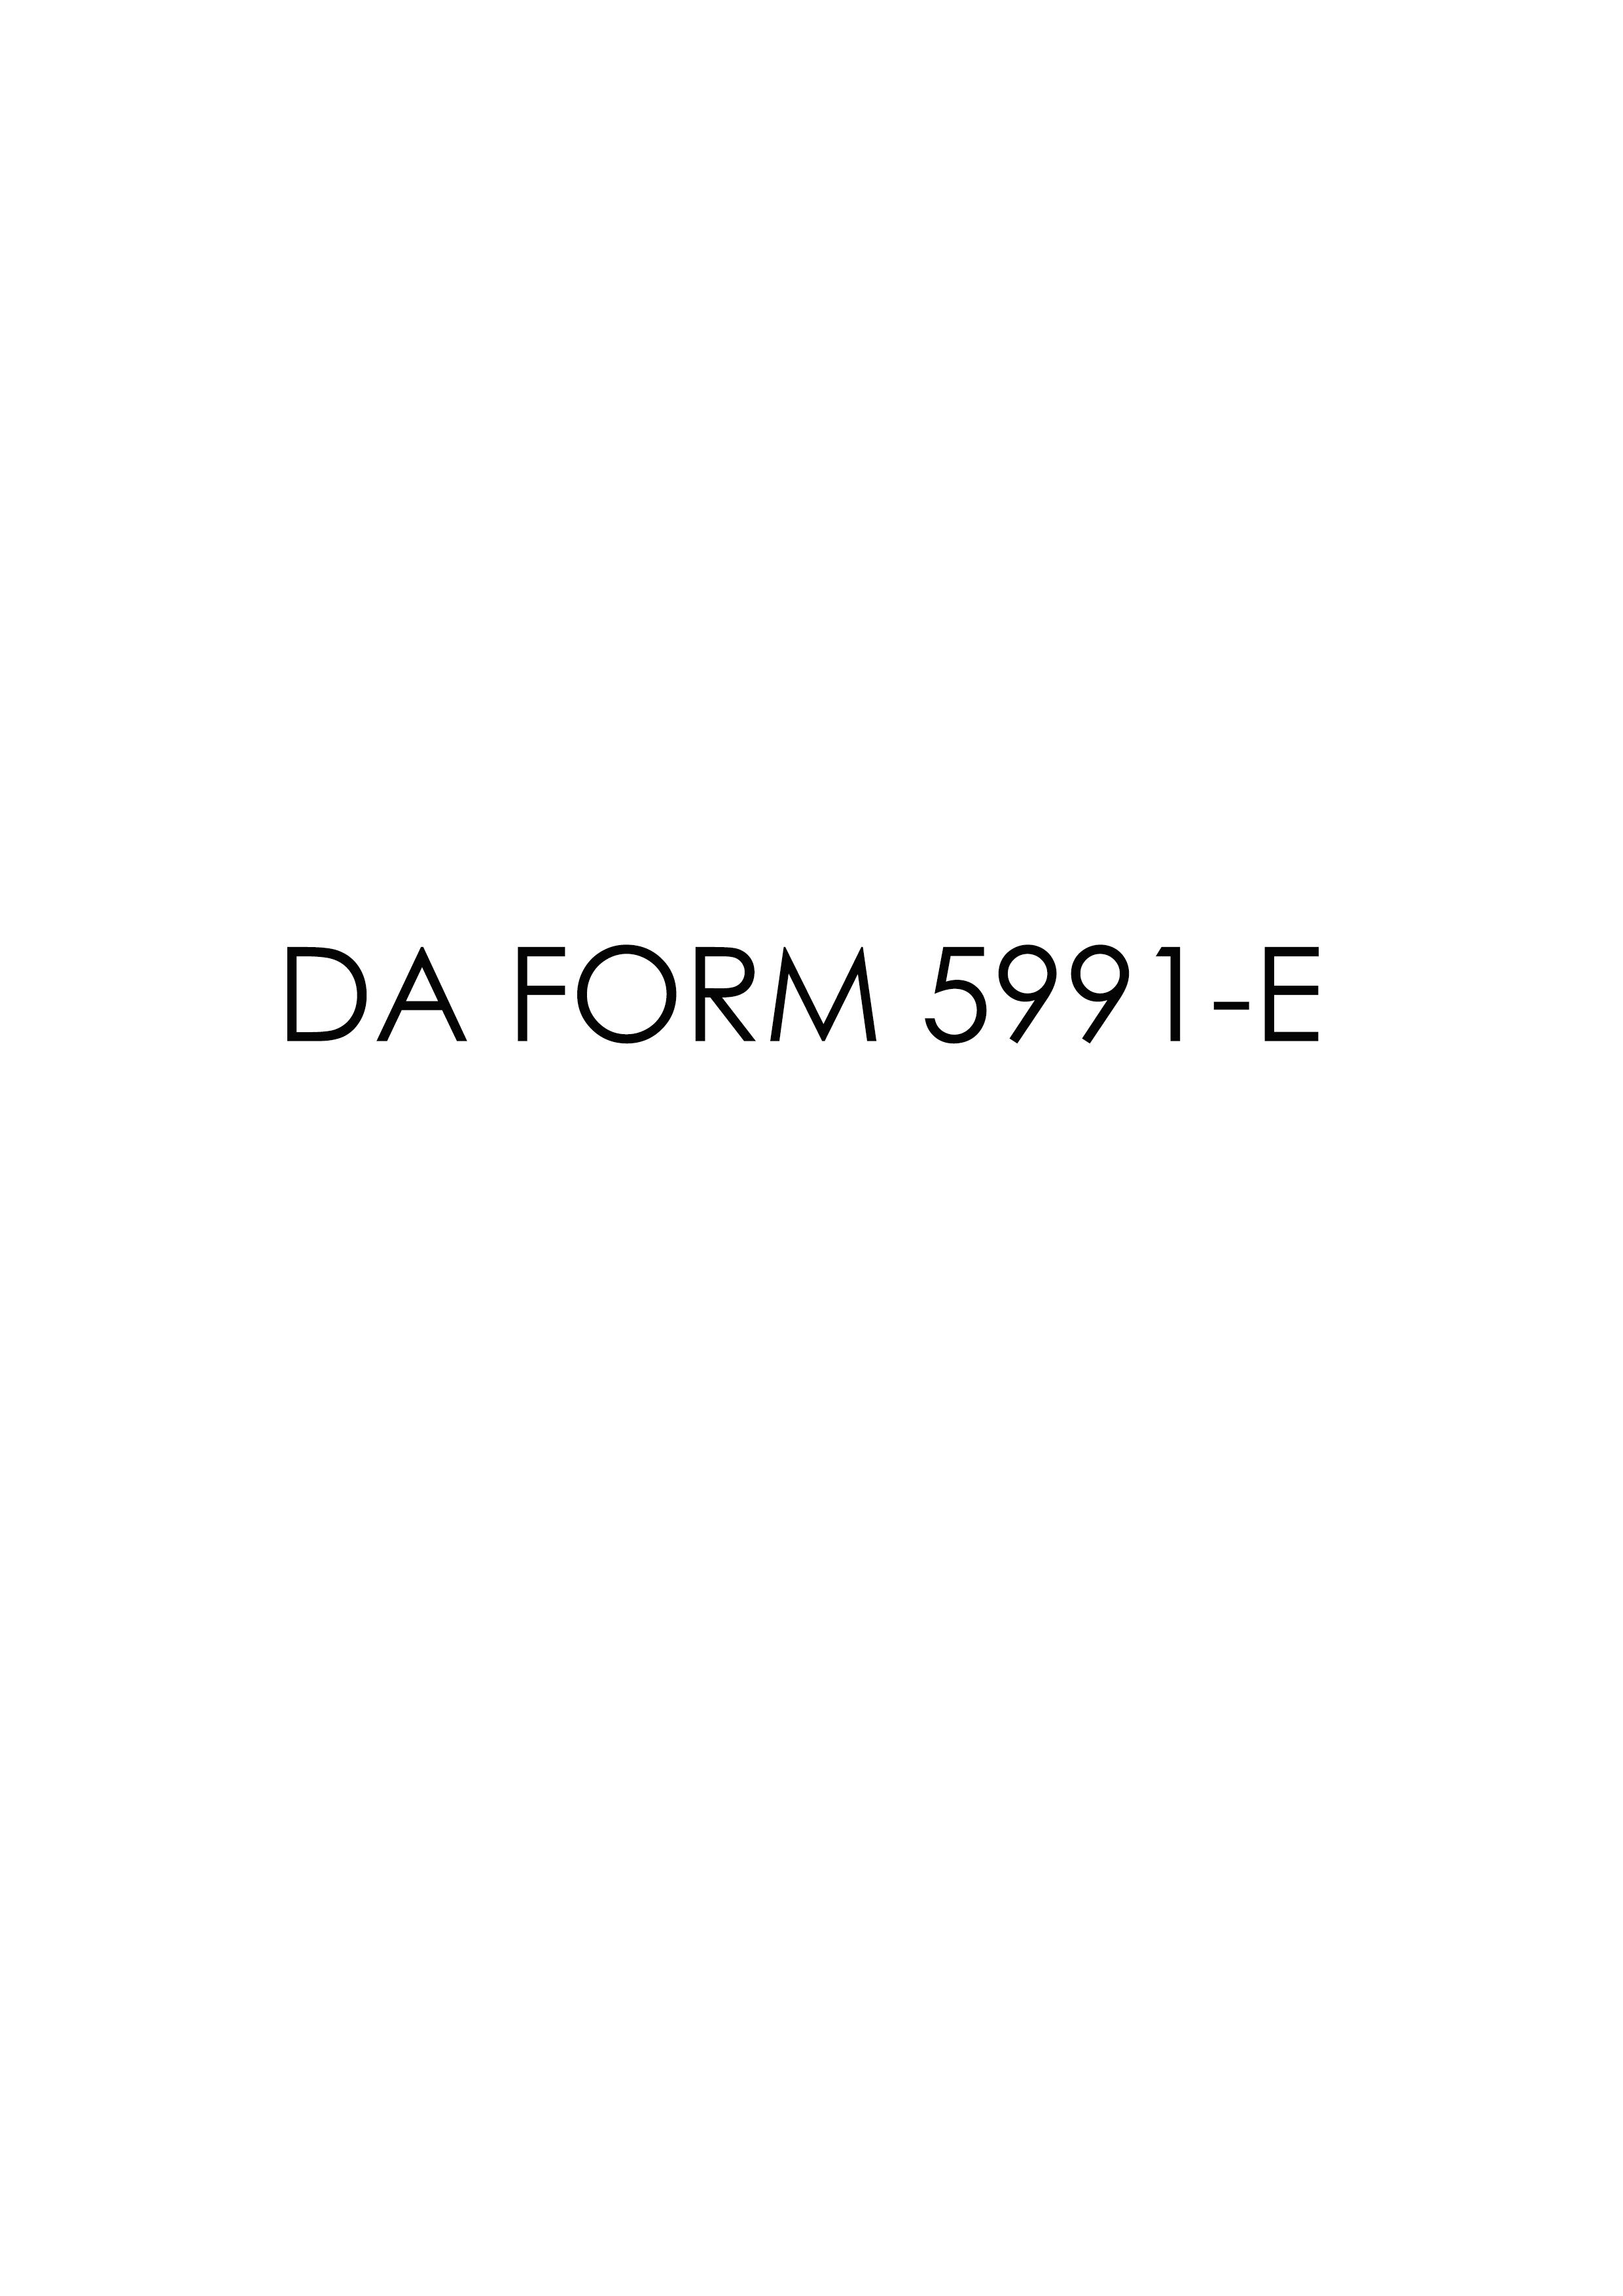 da Form 5991-E fillable